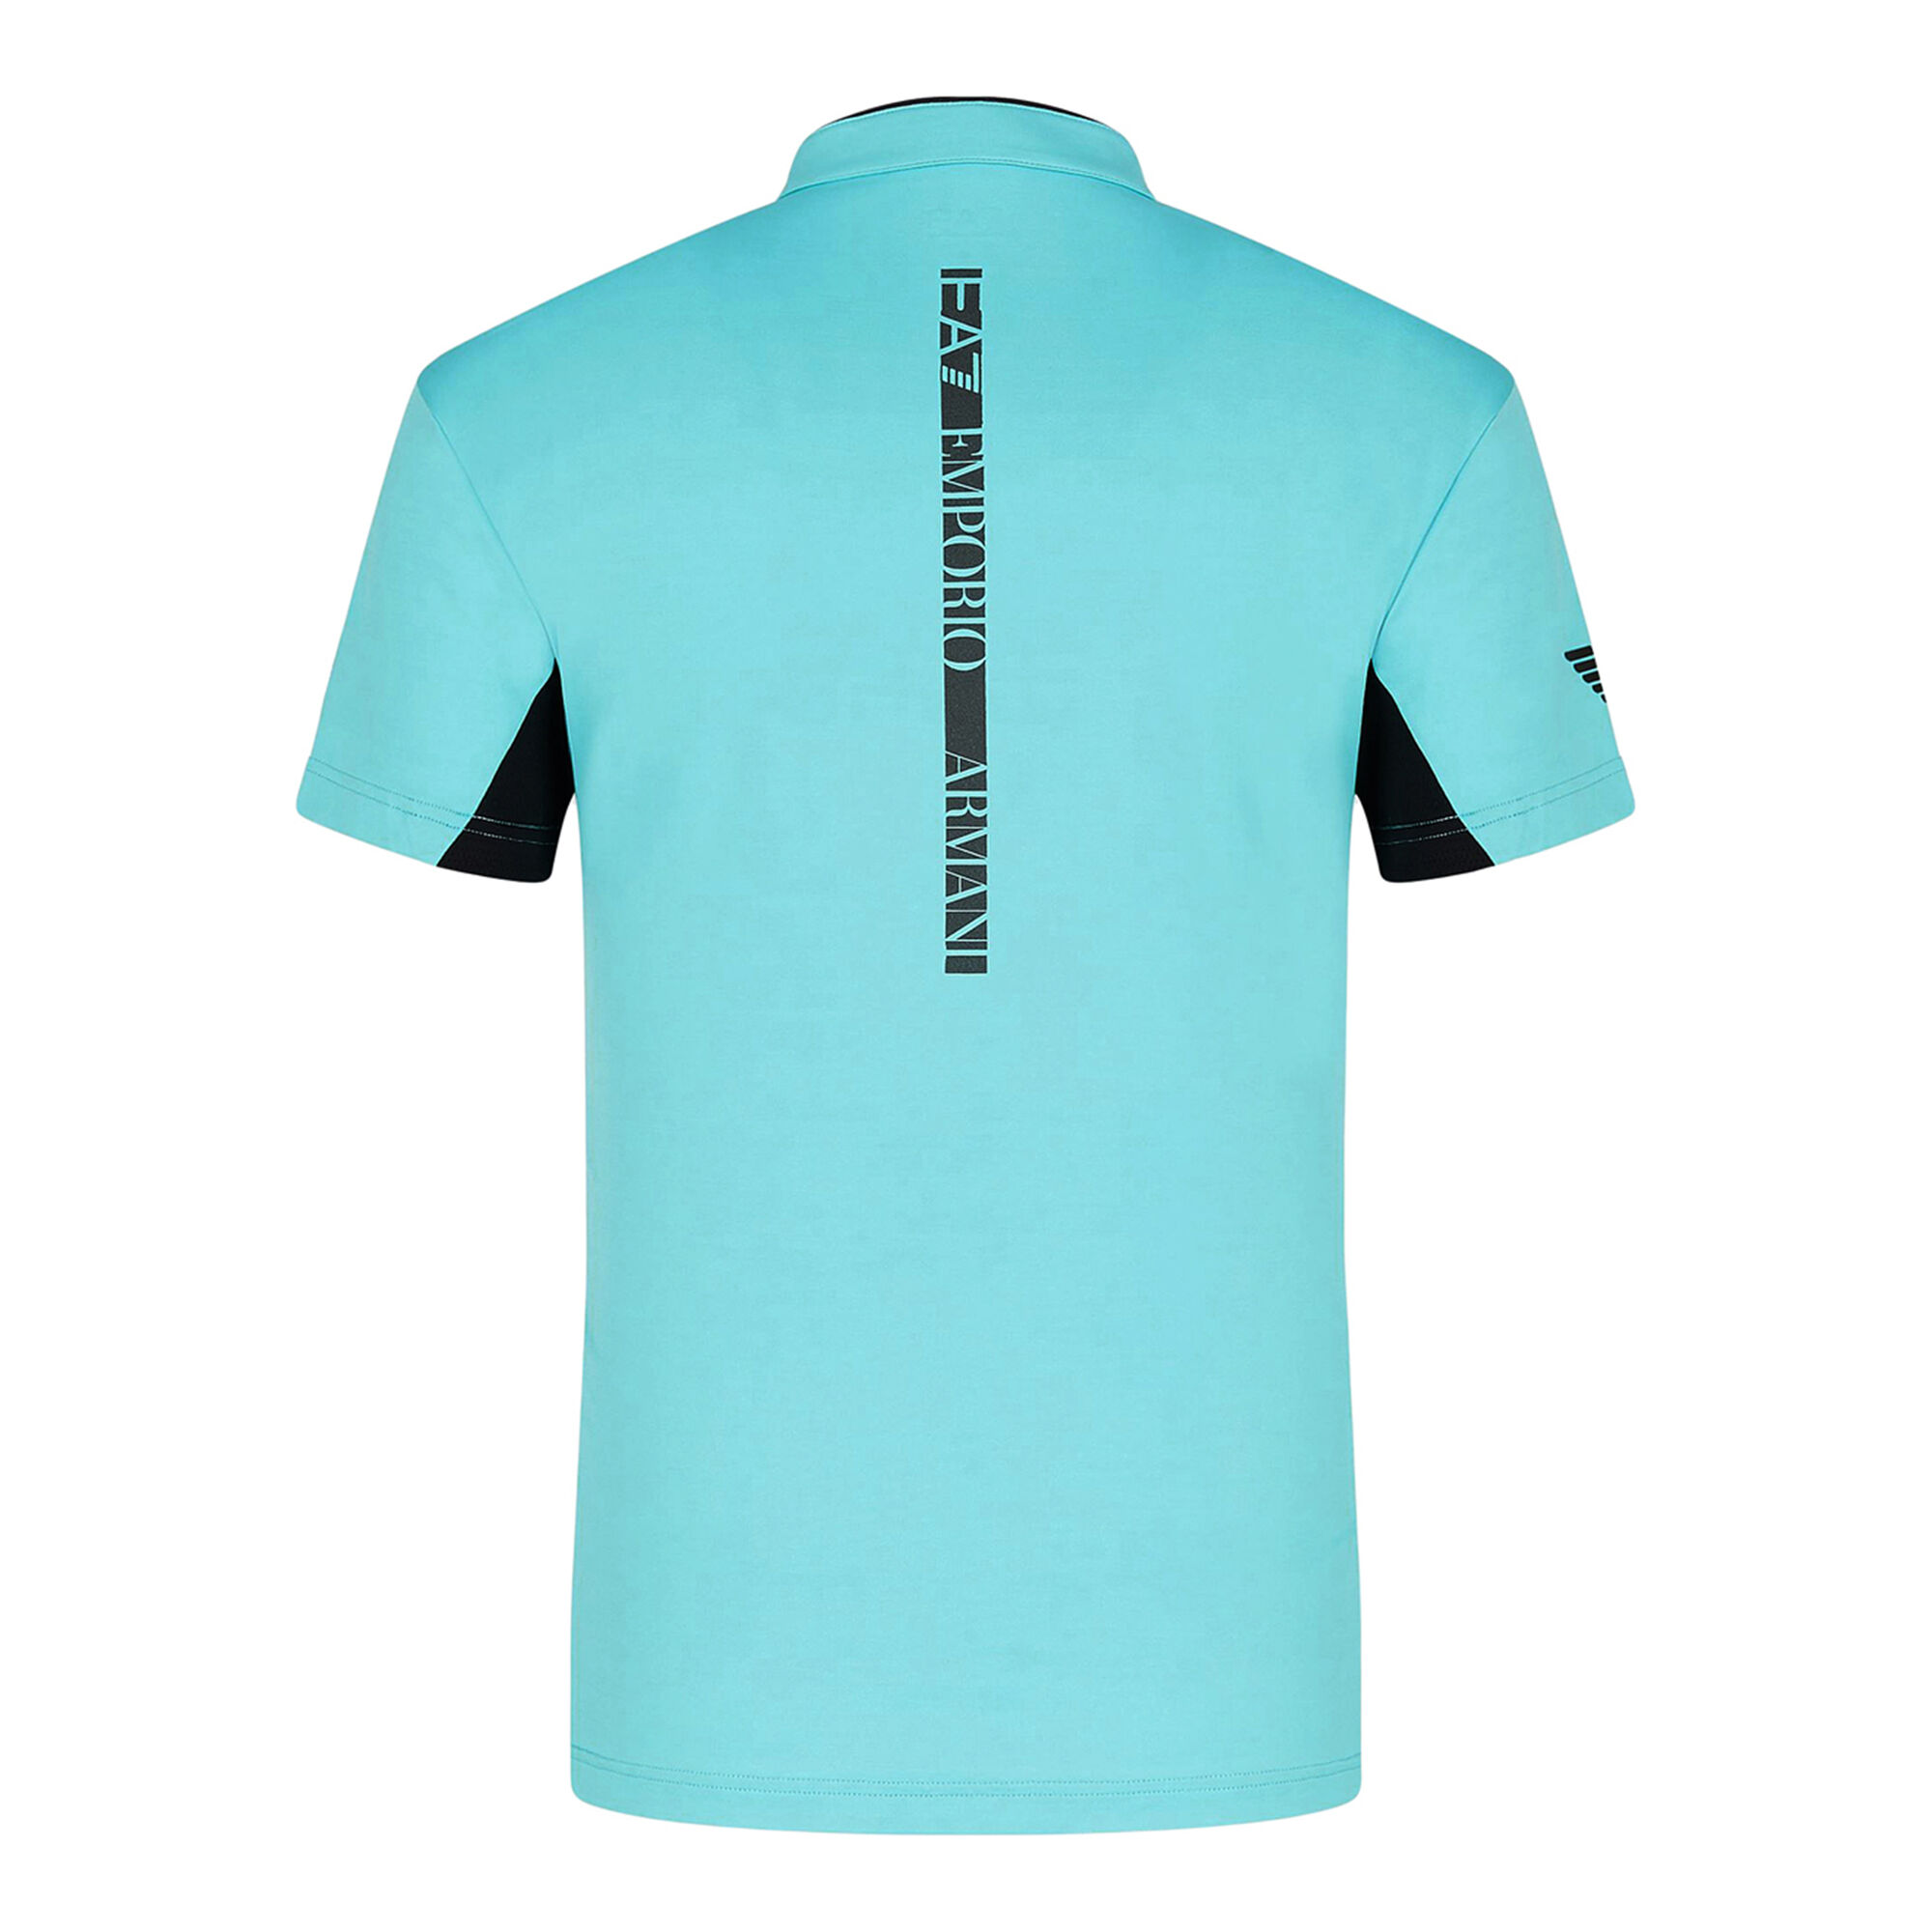 buy EA7 T-Shirt Men - Turquoise, Black online | Tennis-Point